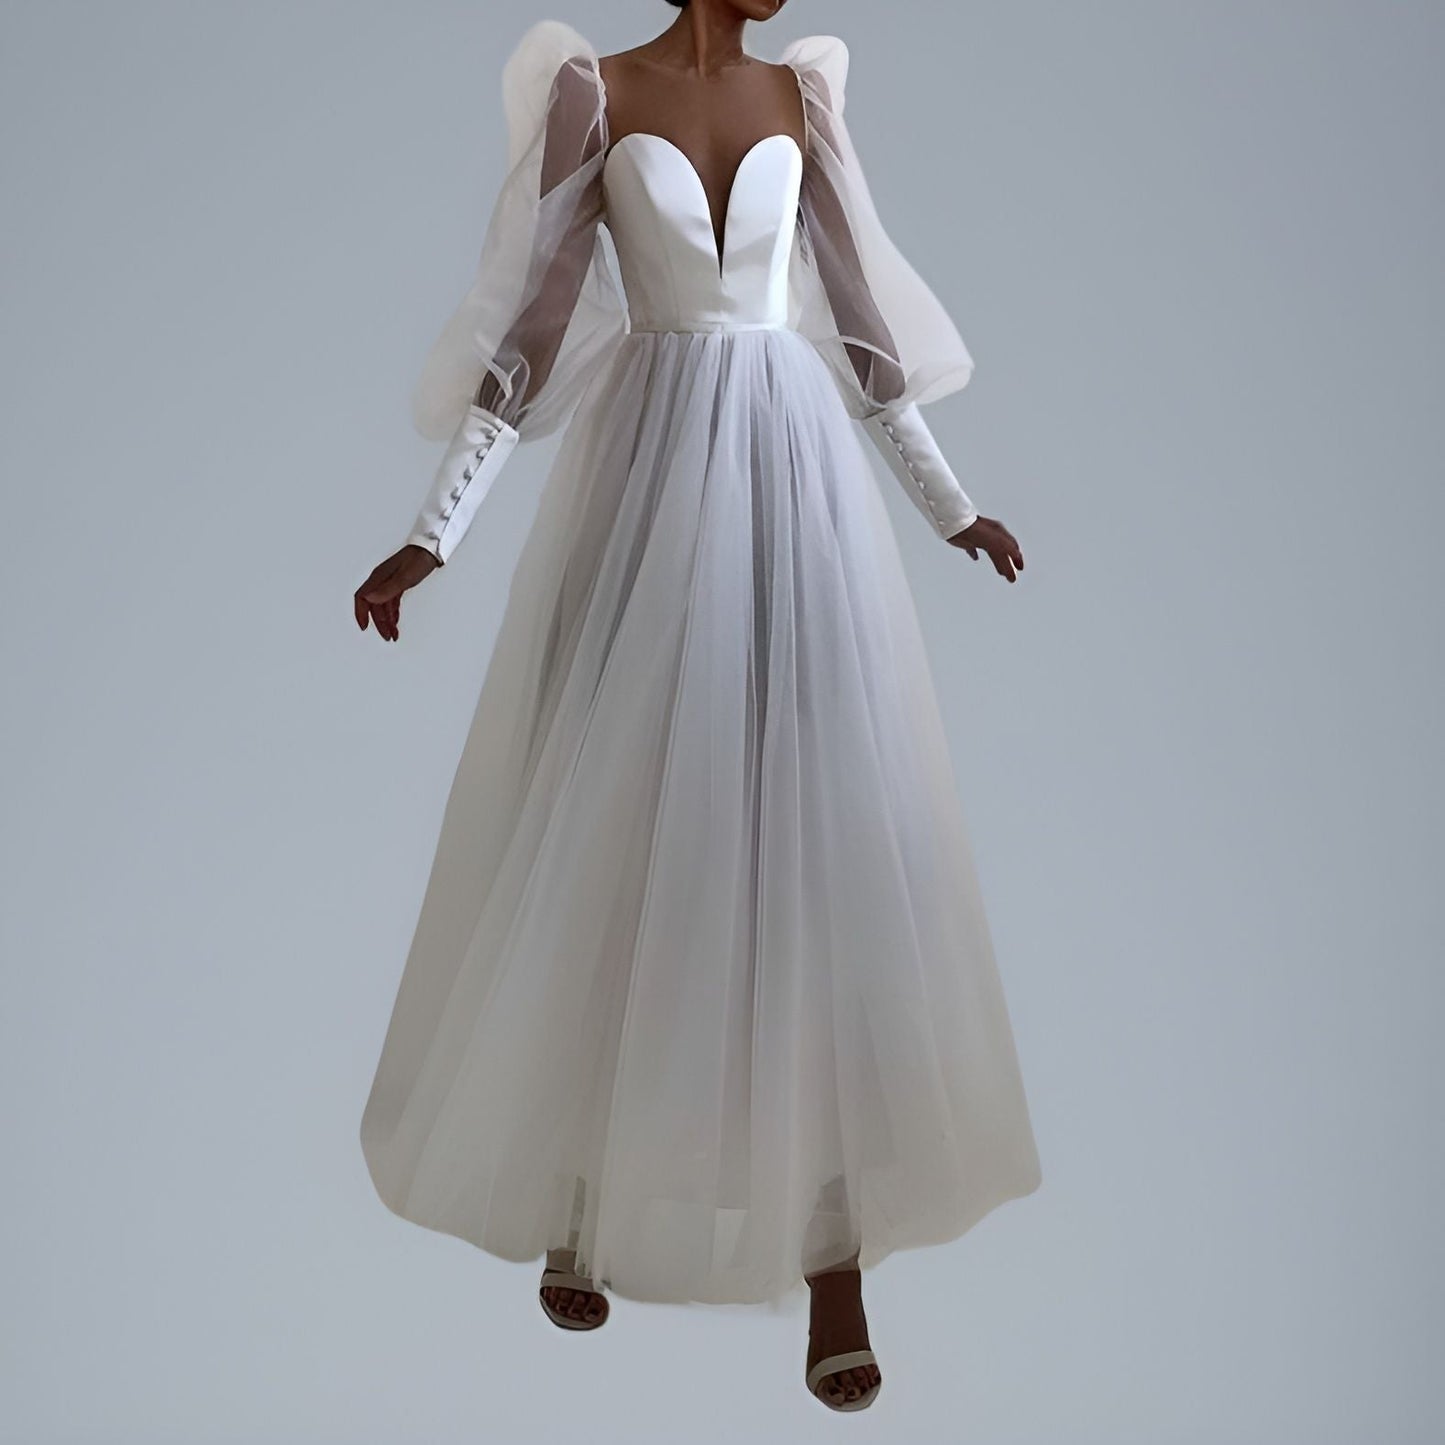 FAITH Formal Couture Dress